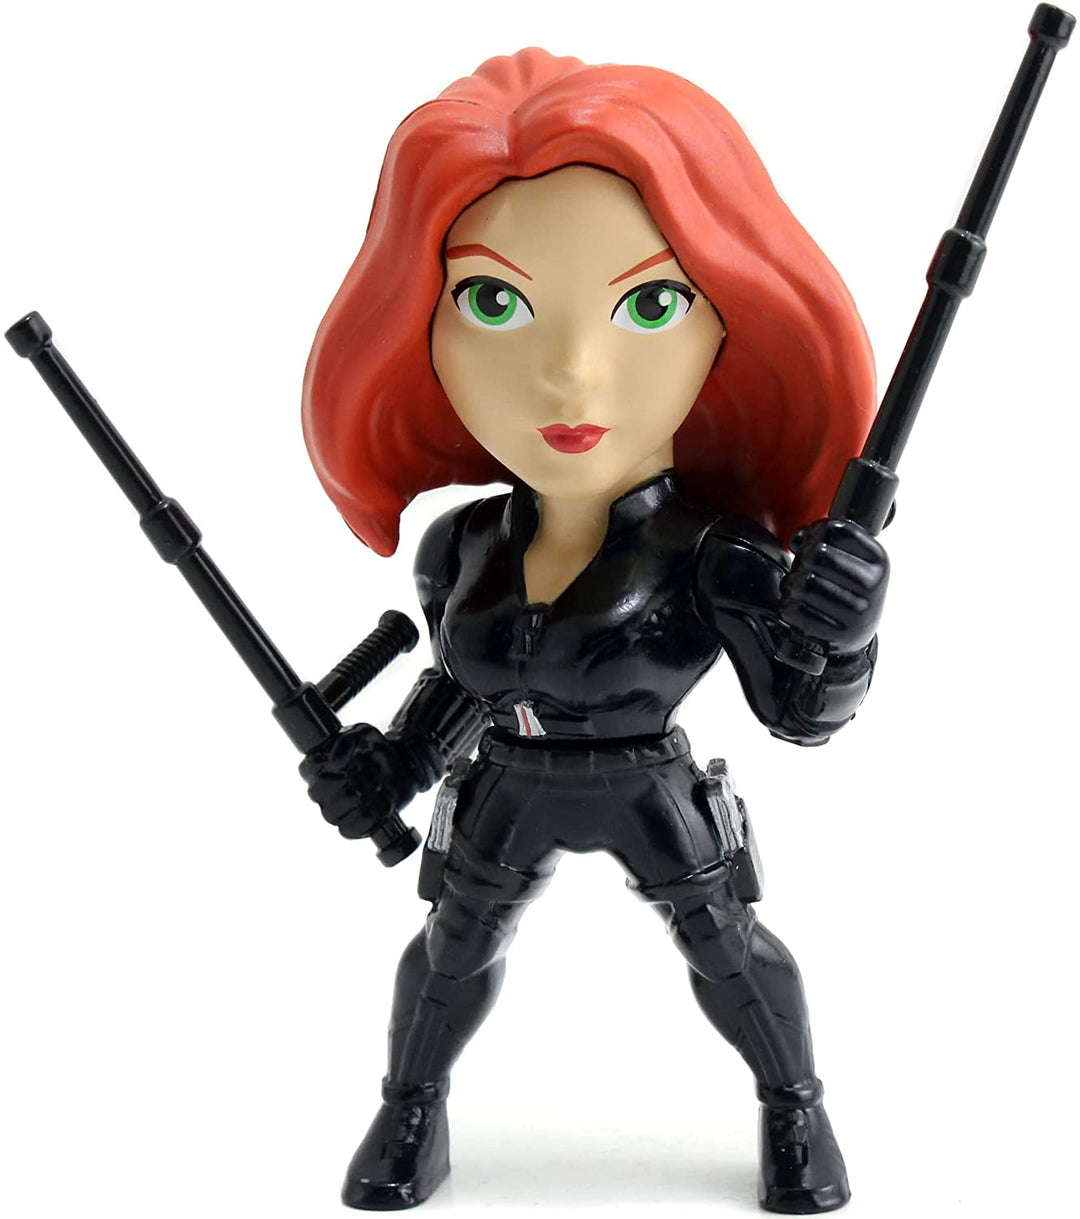 Jada Toys 253221014 Marvel Black Widow Figure Die-cast Collectable Figure 10 cm